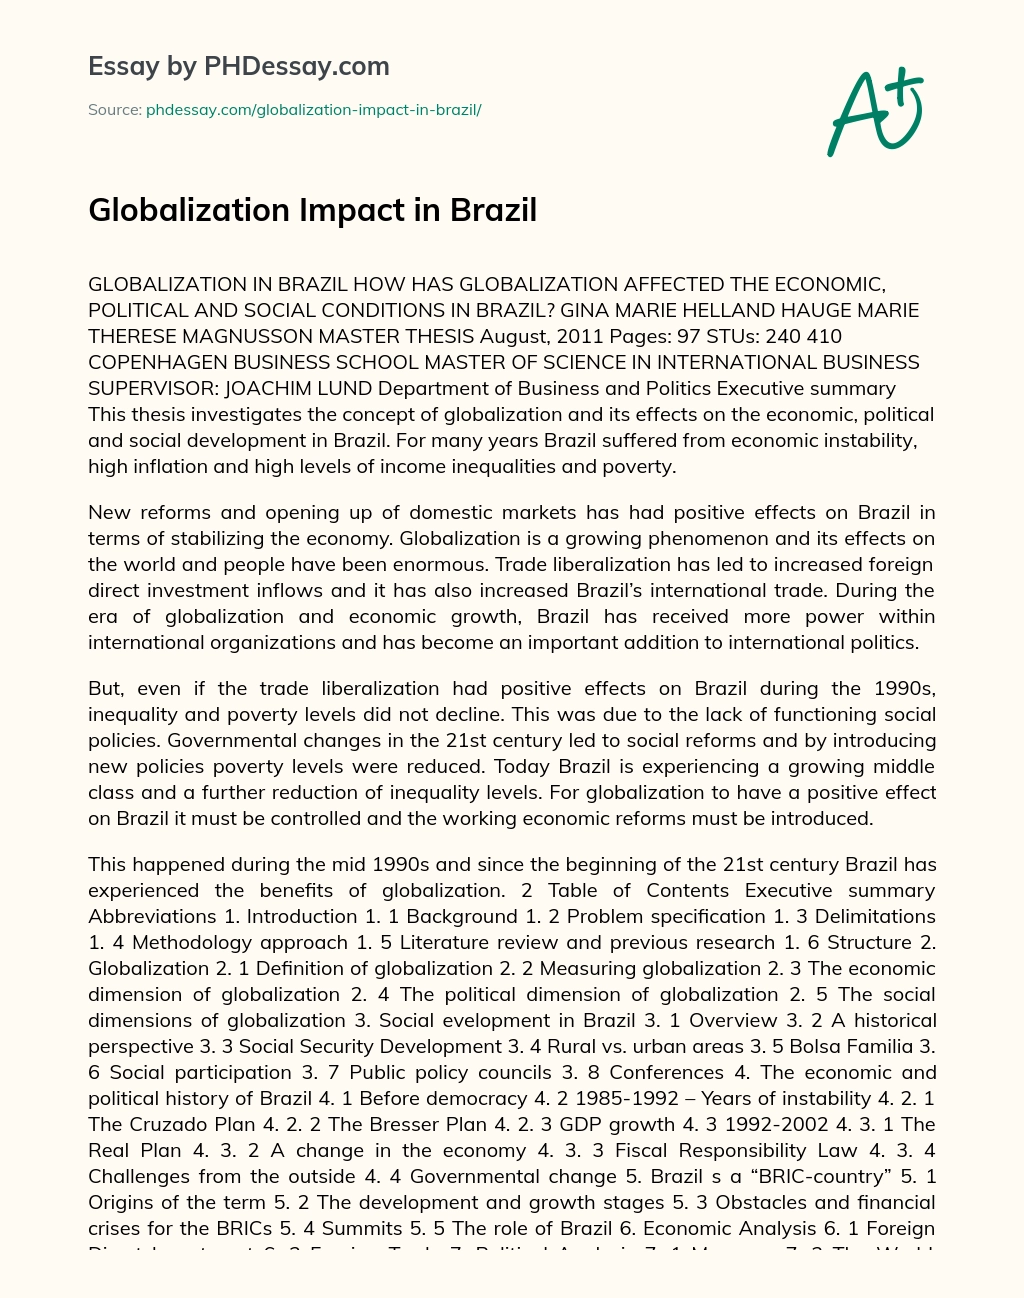 Globalization Impact in Brazil essay